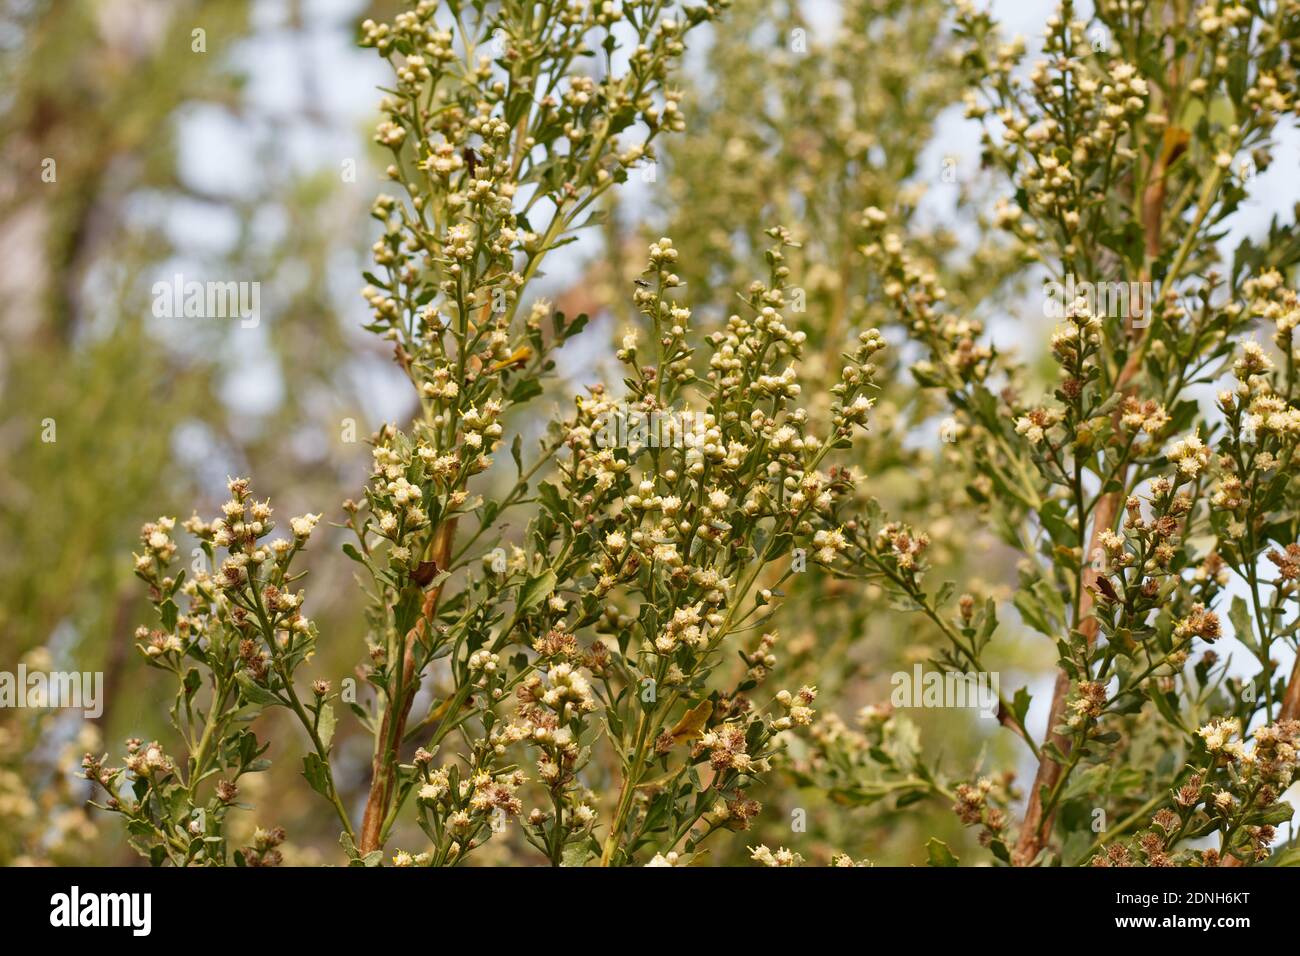 White staminate bloom, Coyote Bush, Baccharis Pilularis, Asteraceae, native shrub, Ballona Freshwater Marsh, Southern California Coast, Autumn. Stock Photo